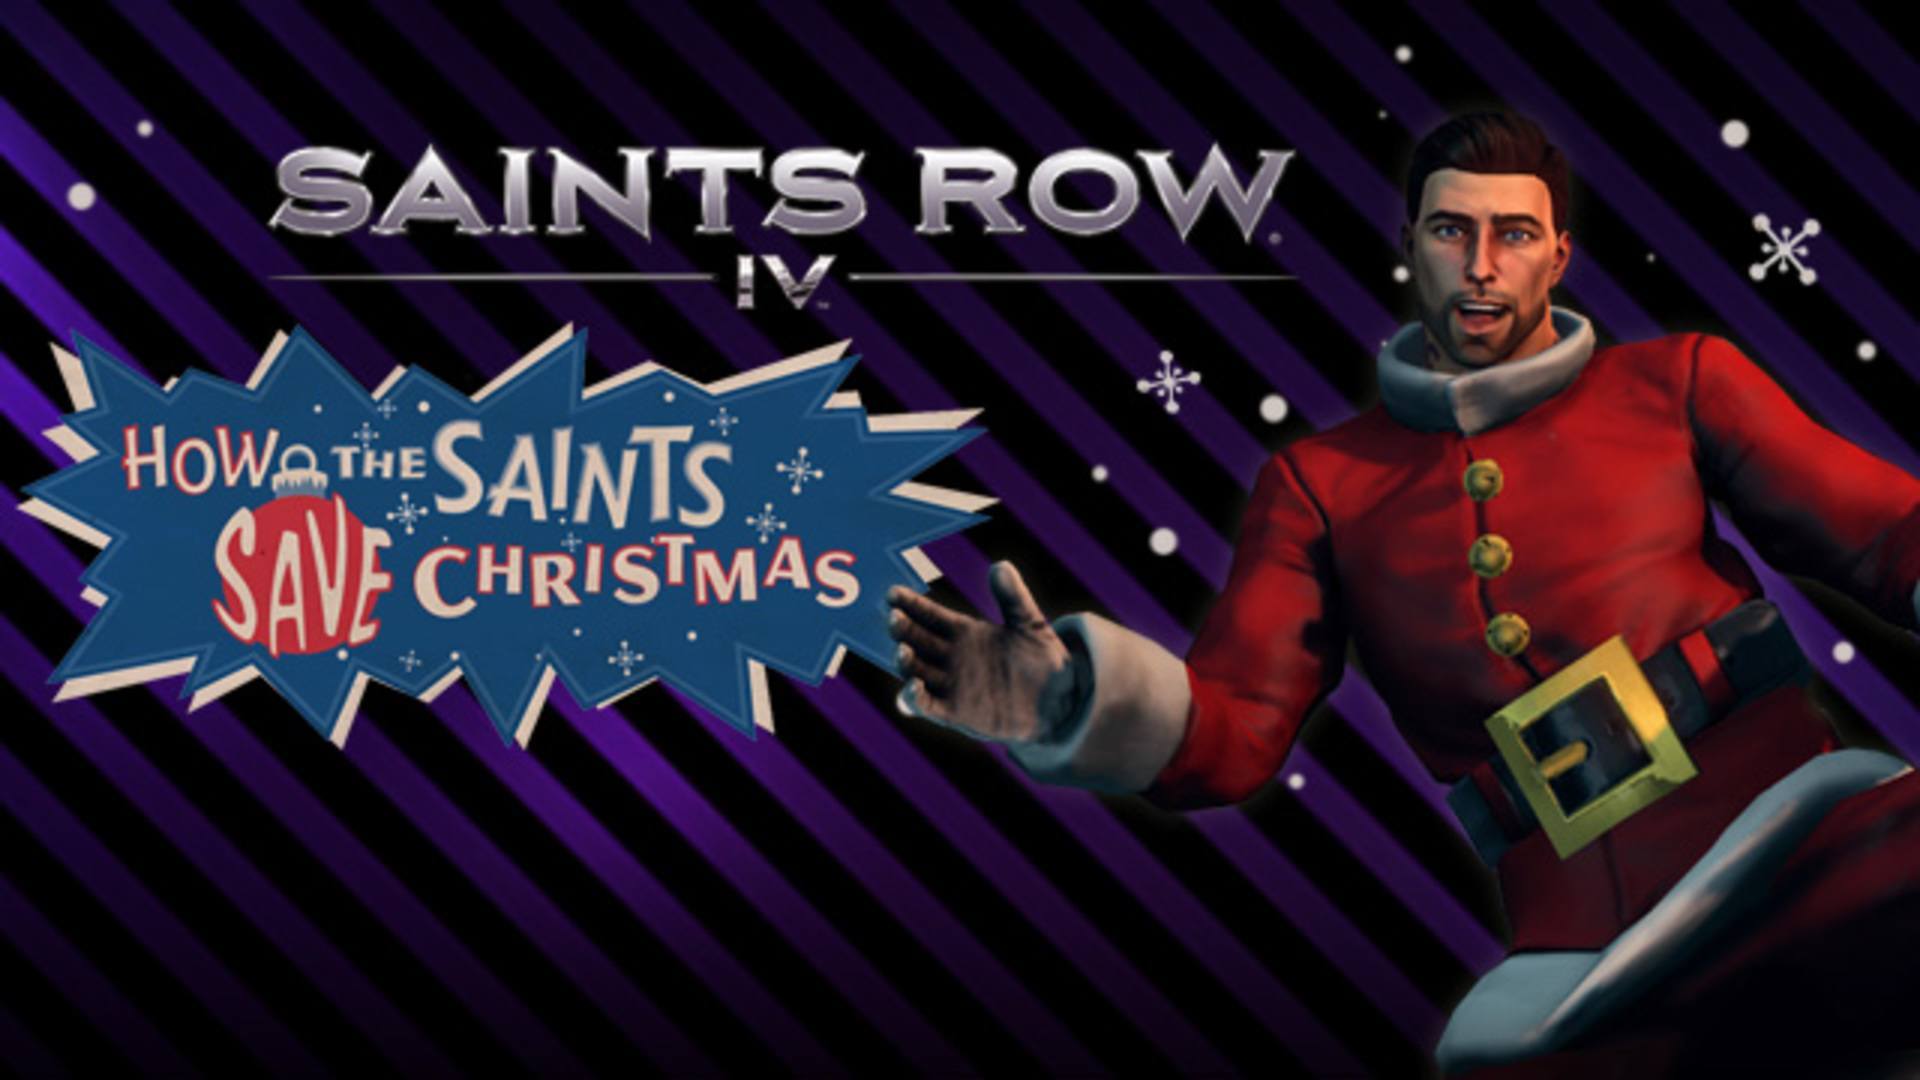 saints row iv how the saints save christmas download free